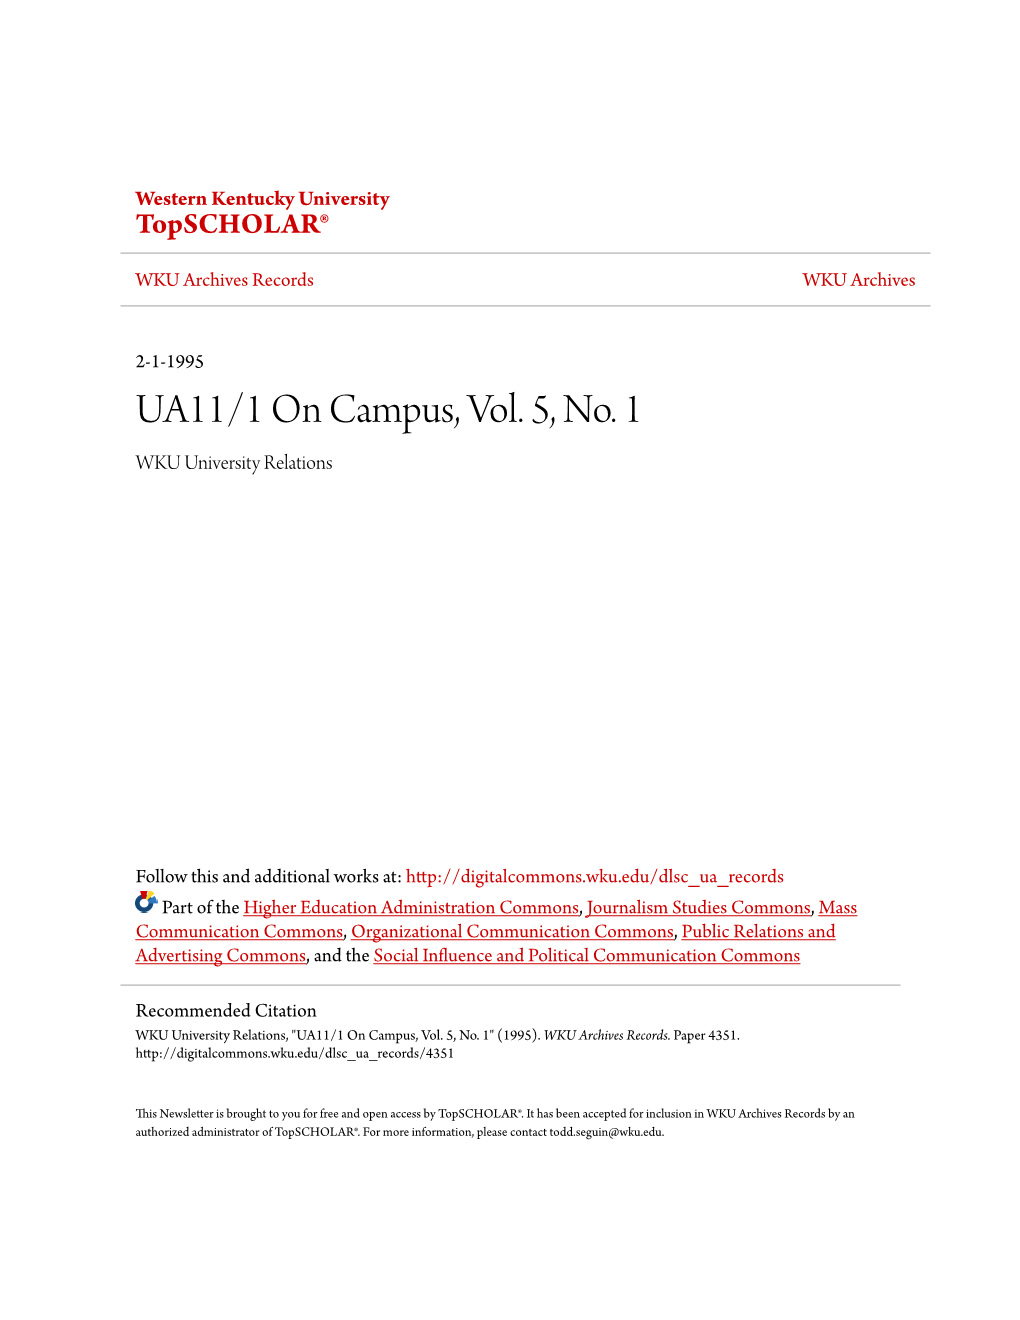 UA11/1 on Campus, Vol. 5, No. 1 WKU University Relations